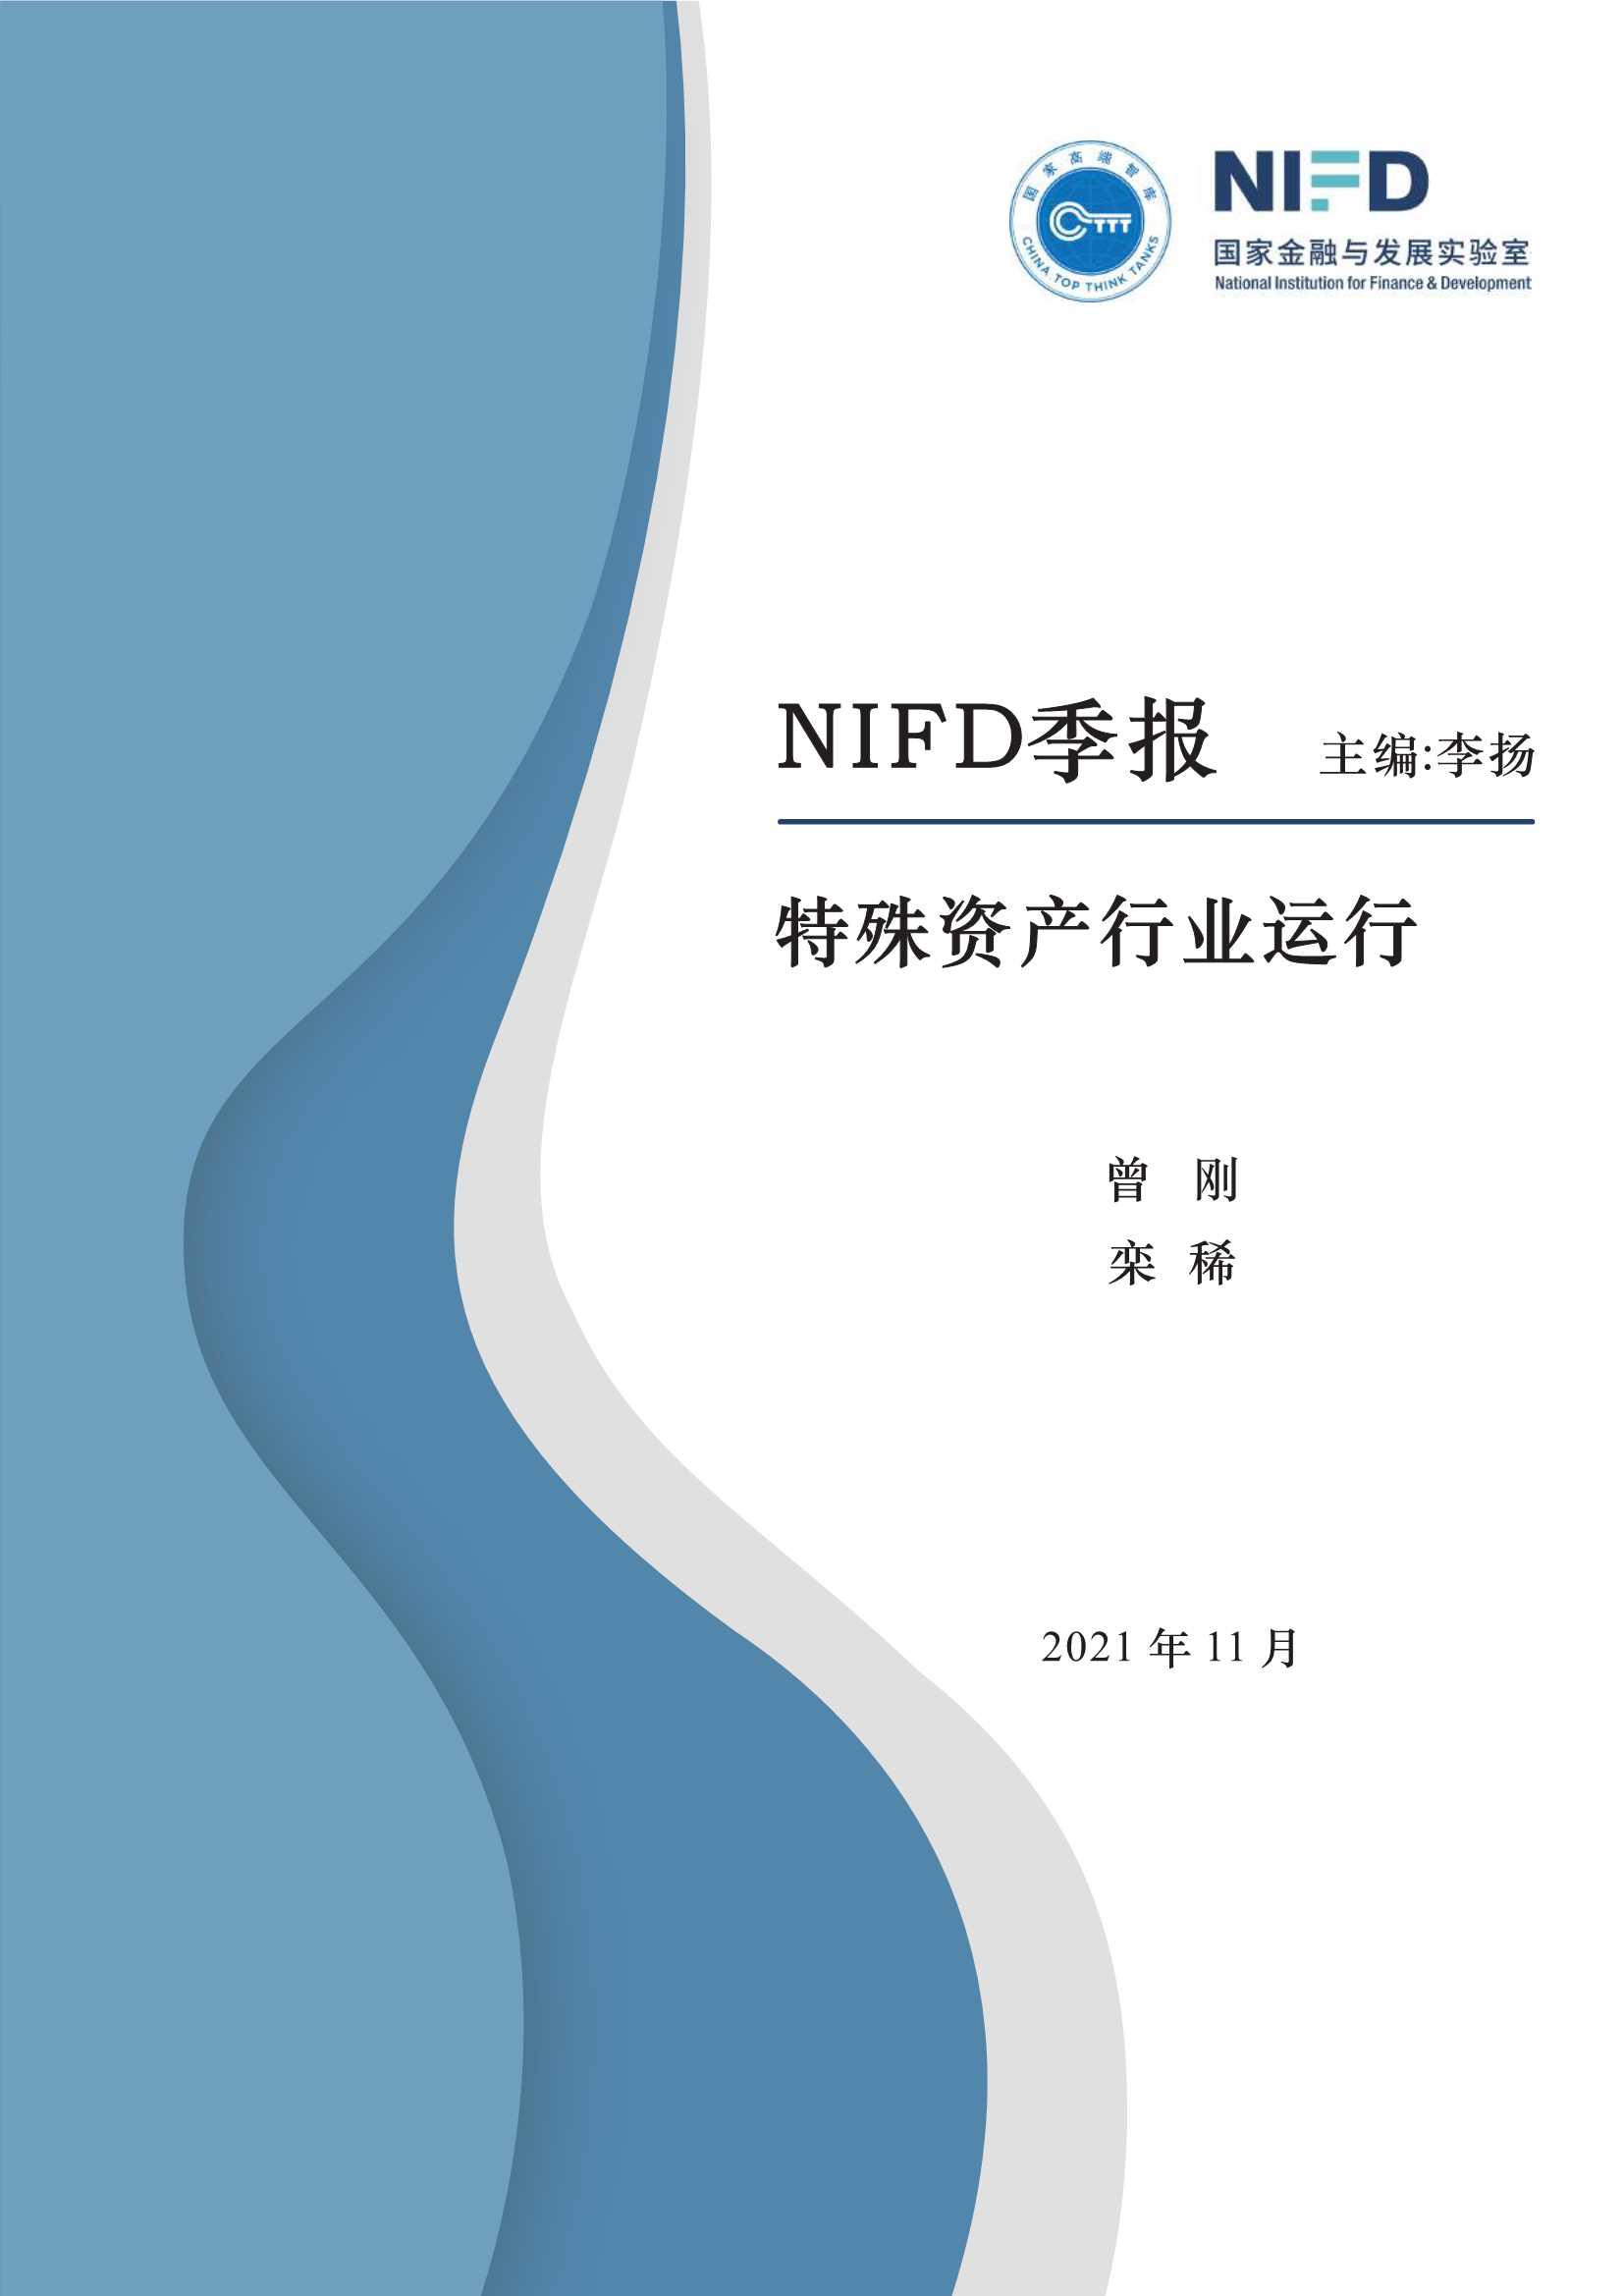 NIFD-2021Q3特殊资产行业运行-2021.11-22页